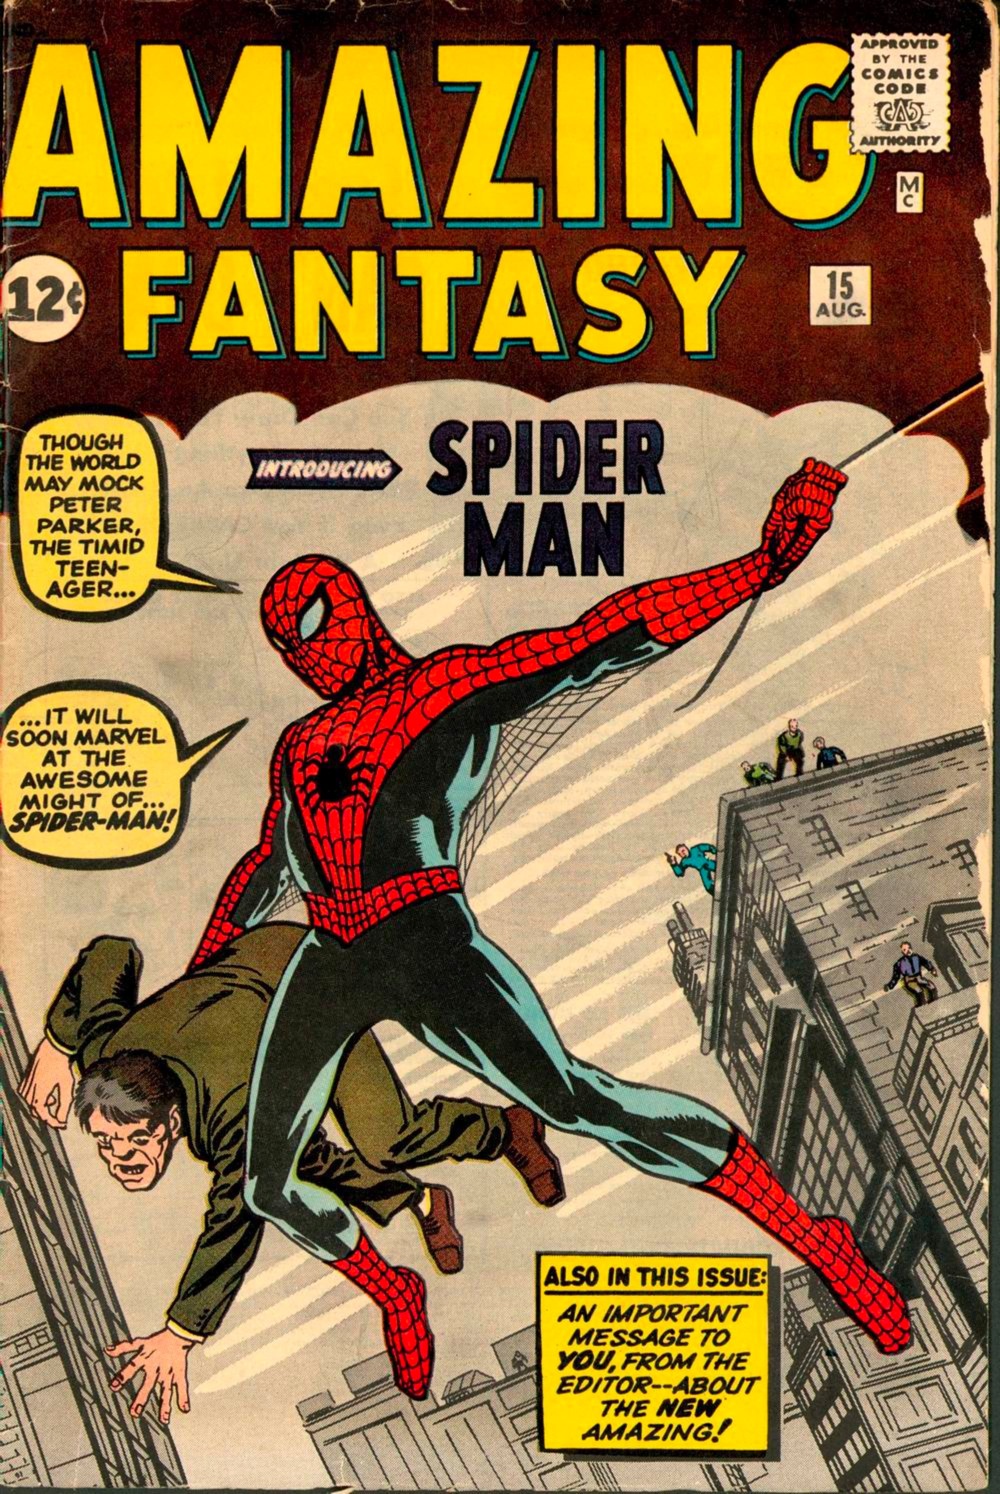 Amazing-Fantasy-15-_Spider-Man_.jpg